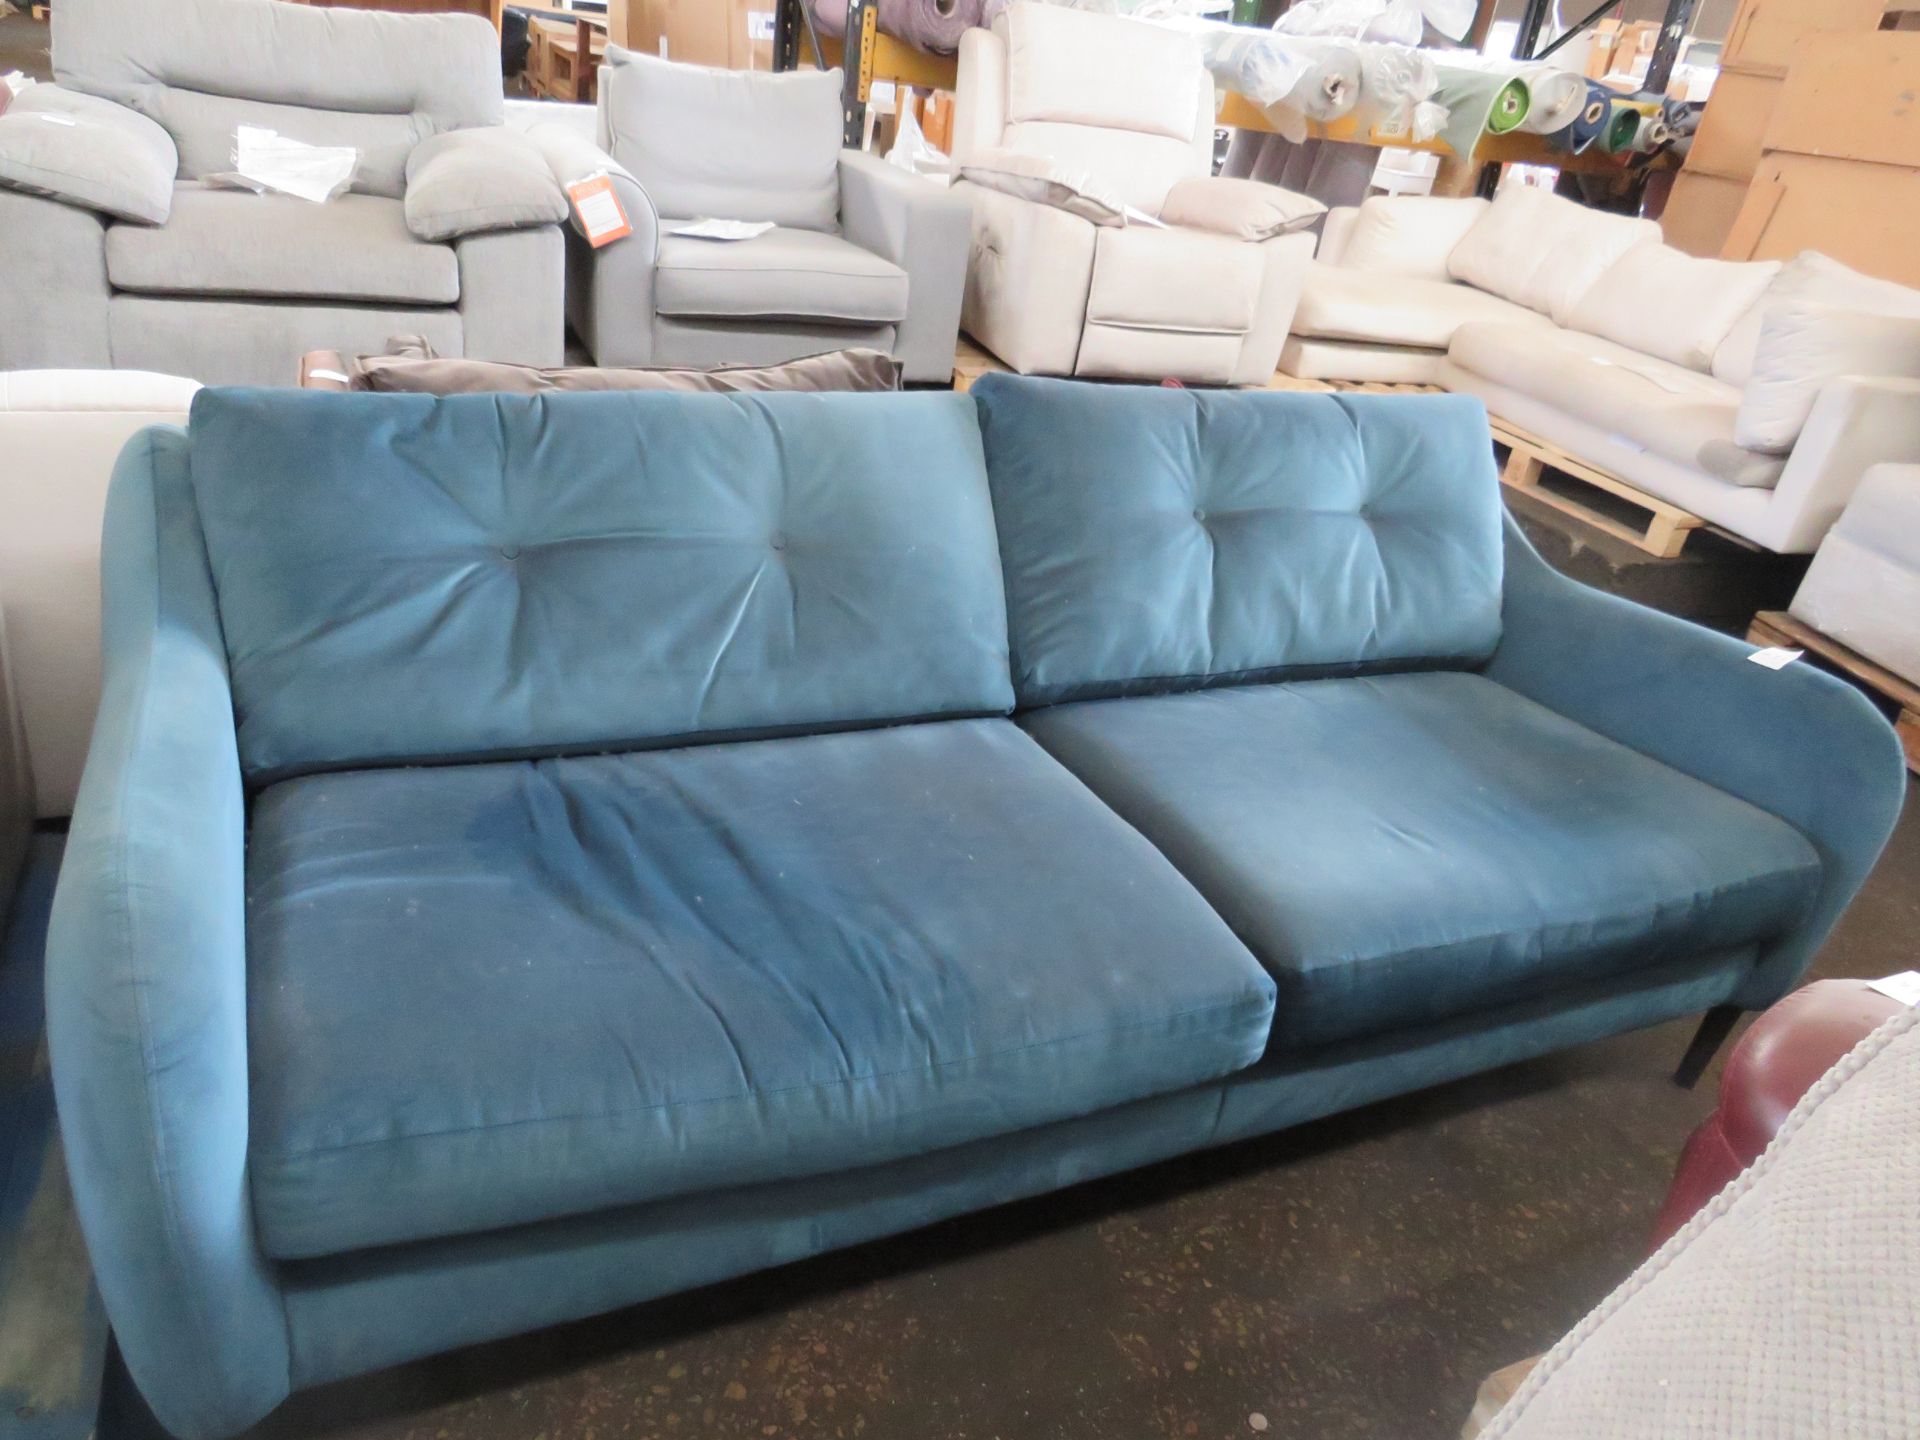 Oak Furnitureland Houston 4 Seater Sofa in Teal fabric RRP 1249.99Deep-seated velvet four seater